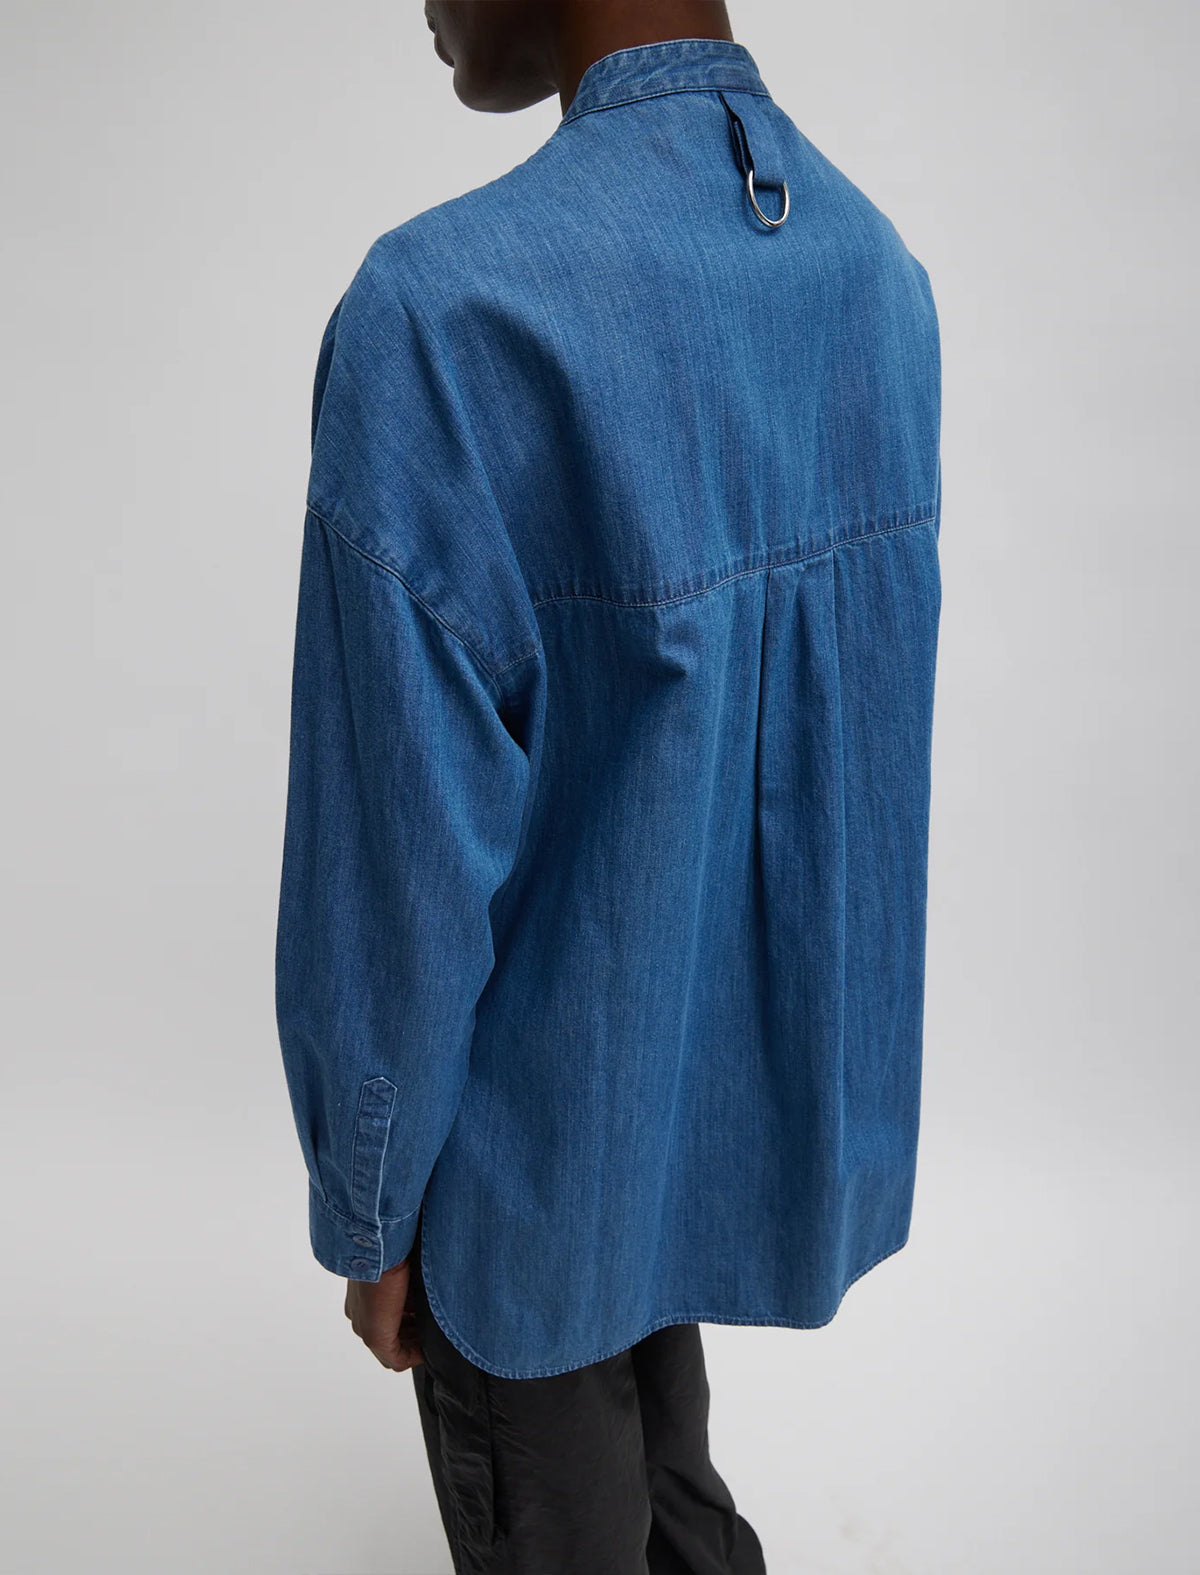 TIBI Light Weight Stone Wash Denim Tuxedo Shirt In Denim Blue